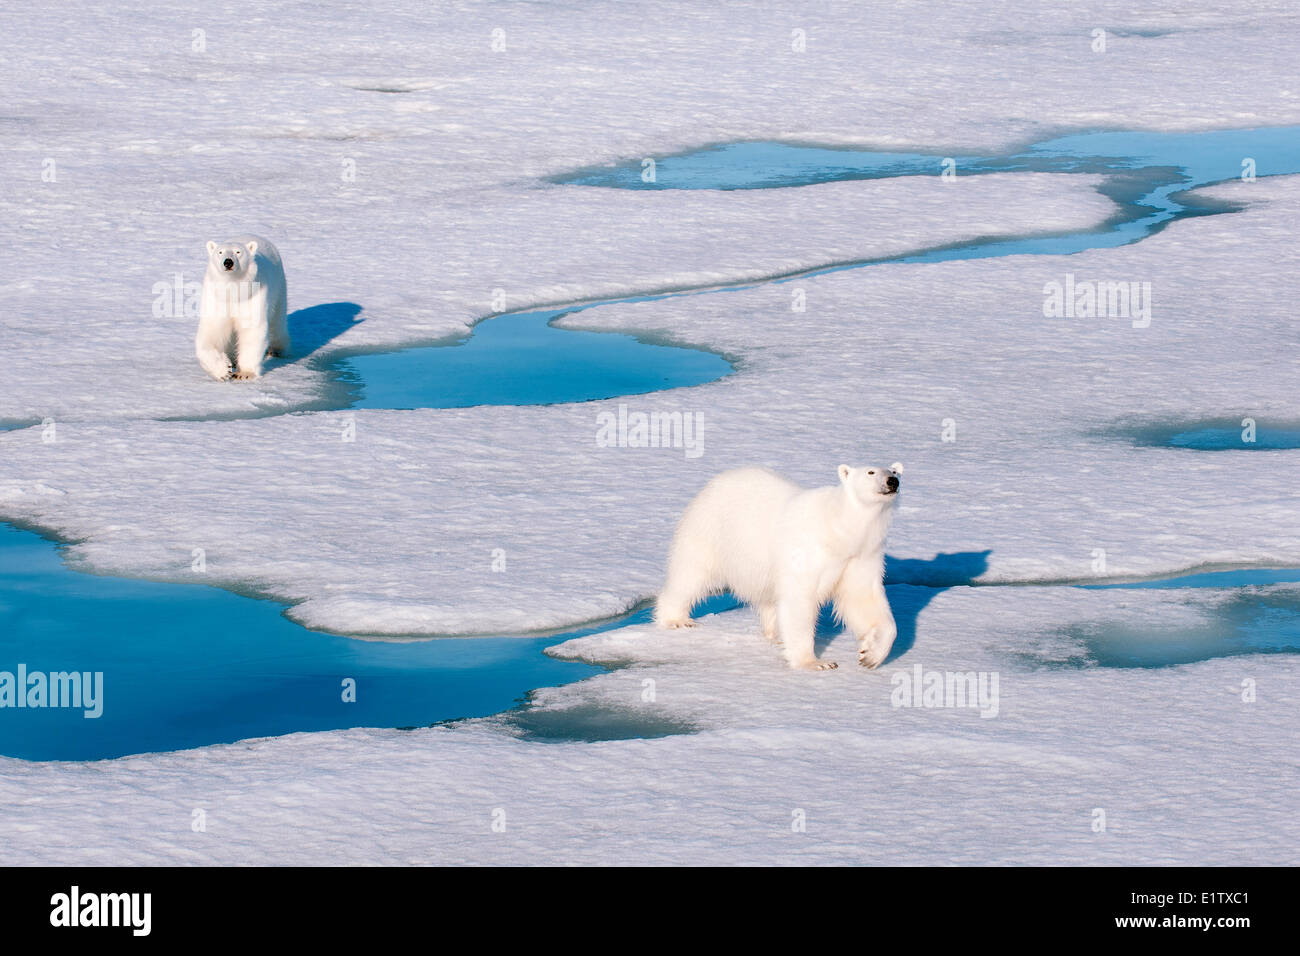 Adult polar bears (Ursus maritimus) interacting, Svabard Archipelago, Norwegian Arctic Stock Photo